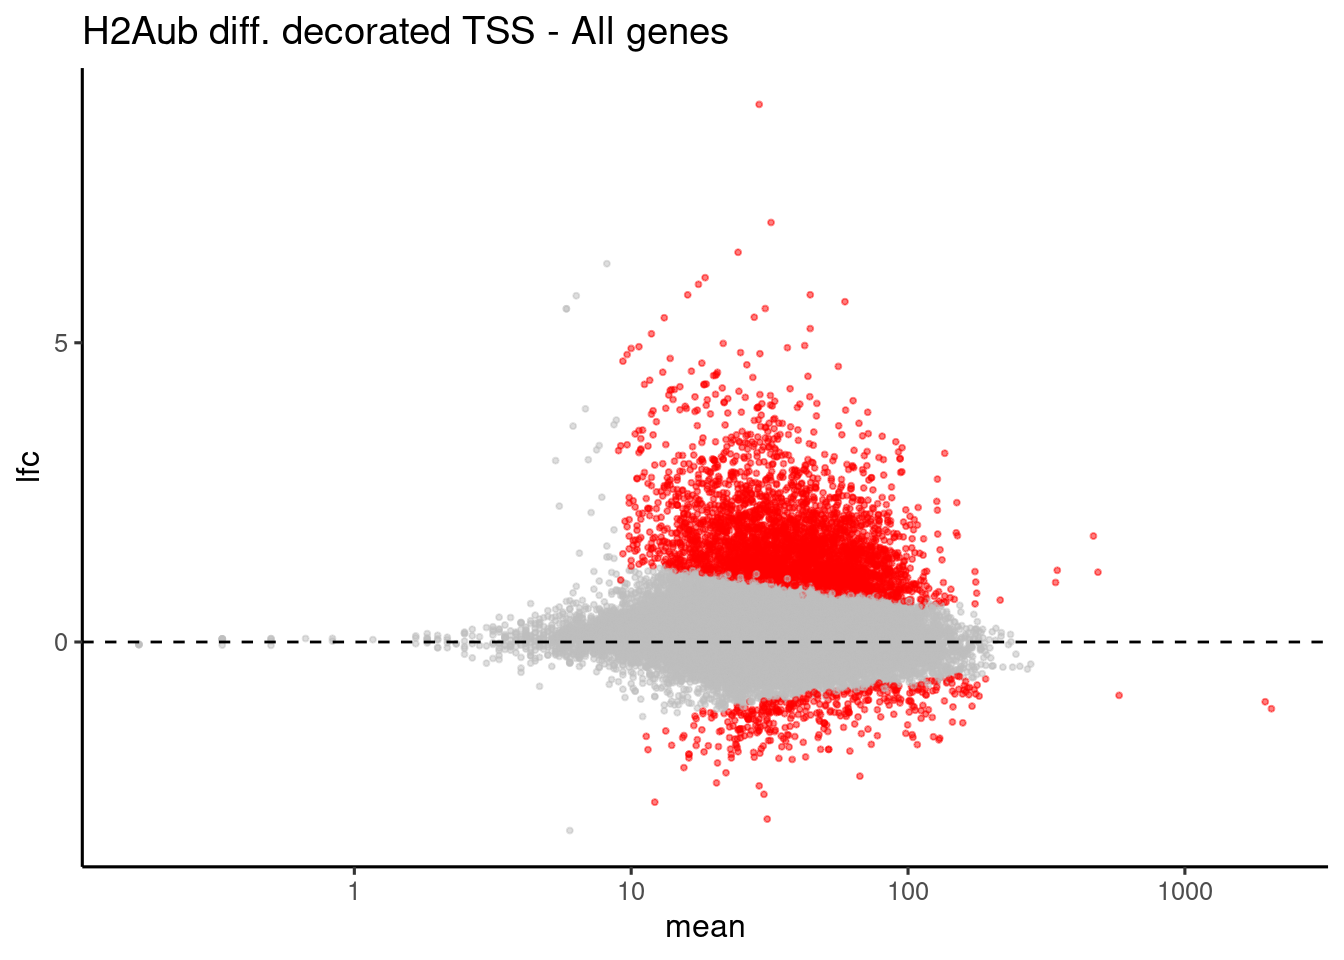 all-genes-tss-h2aub-diff-1.png